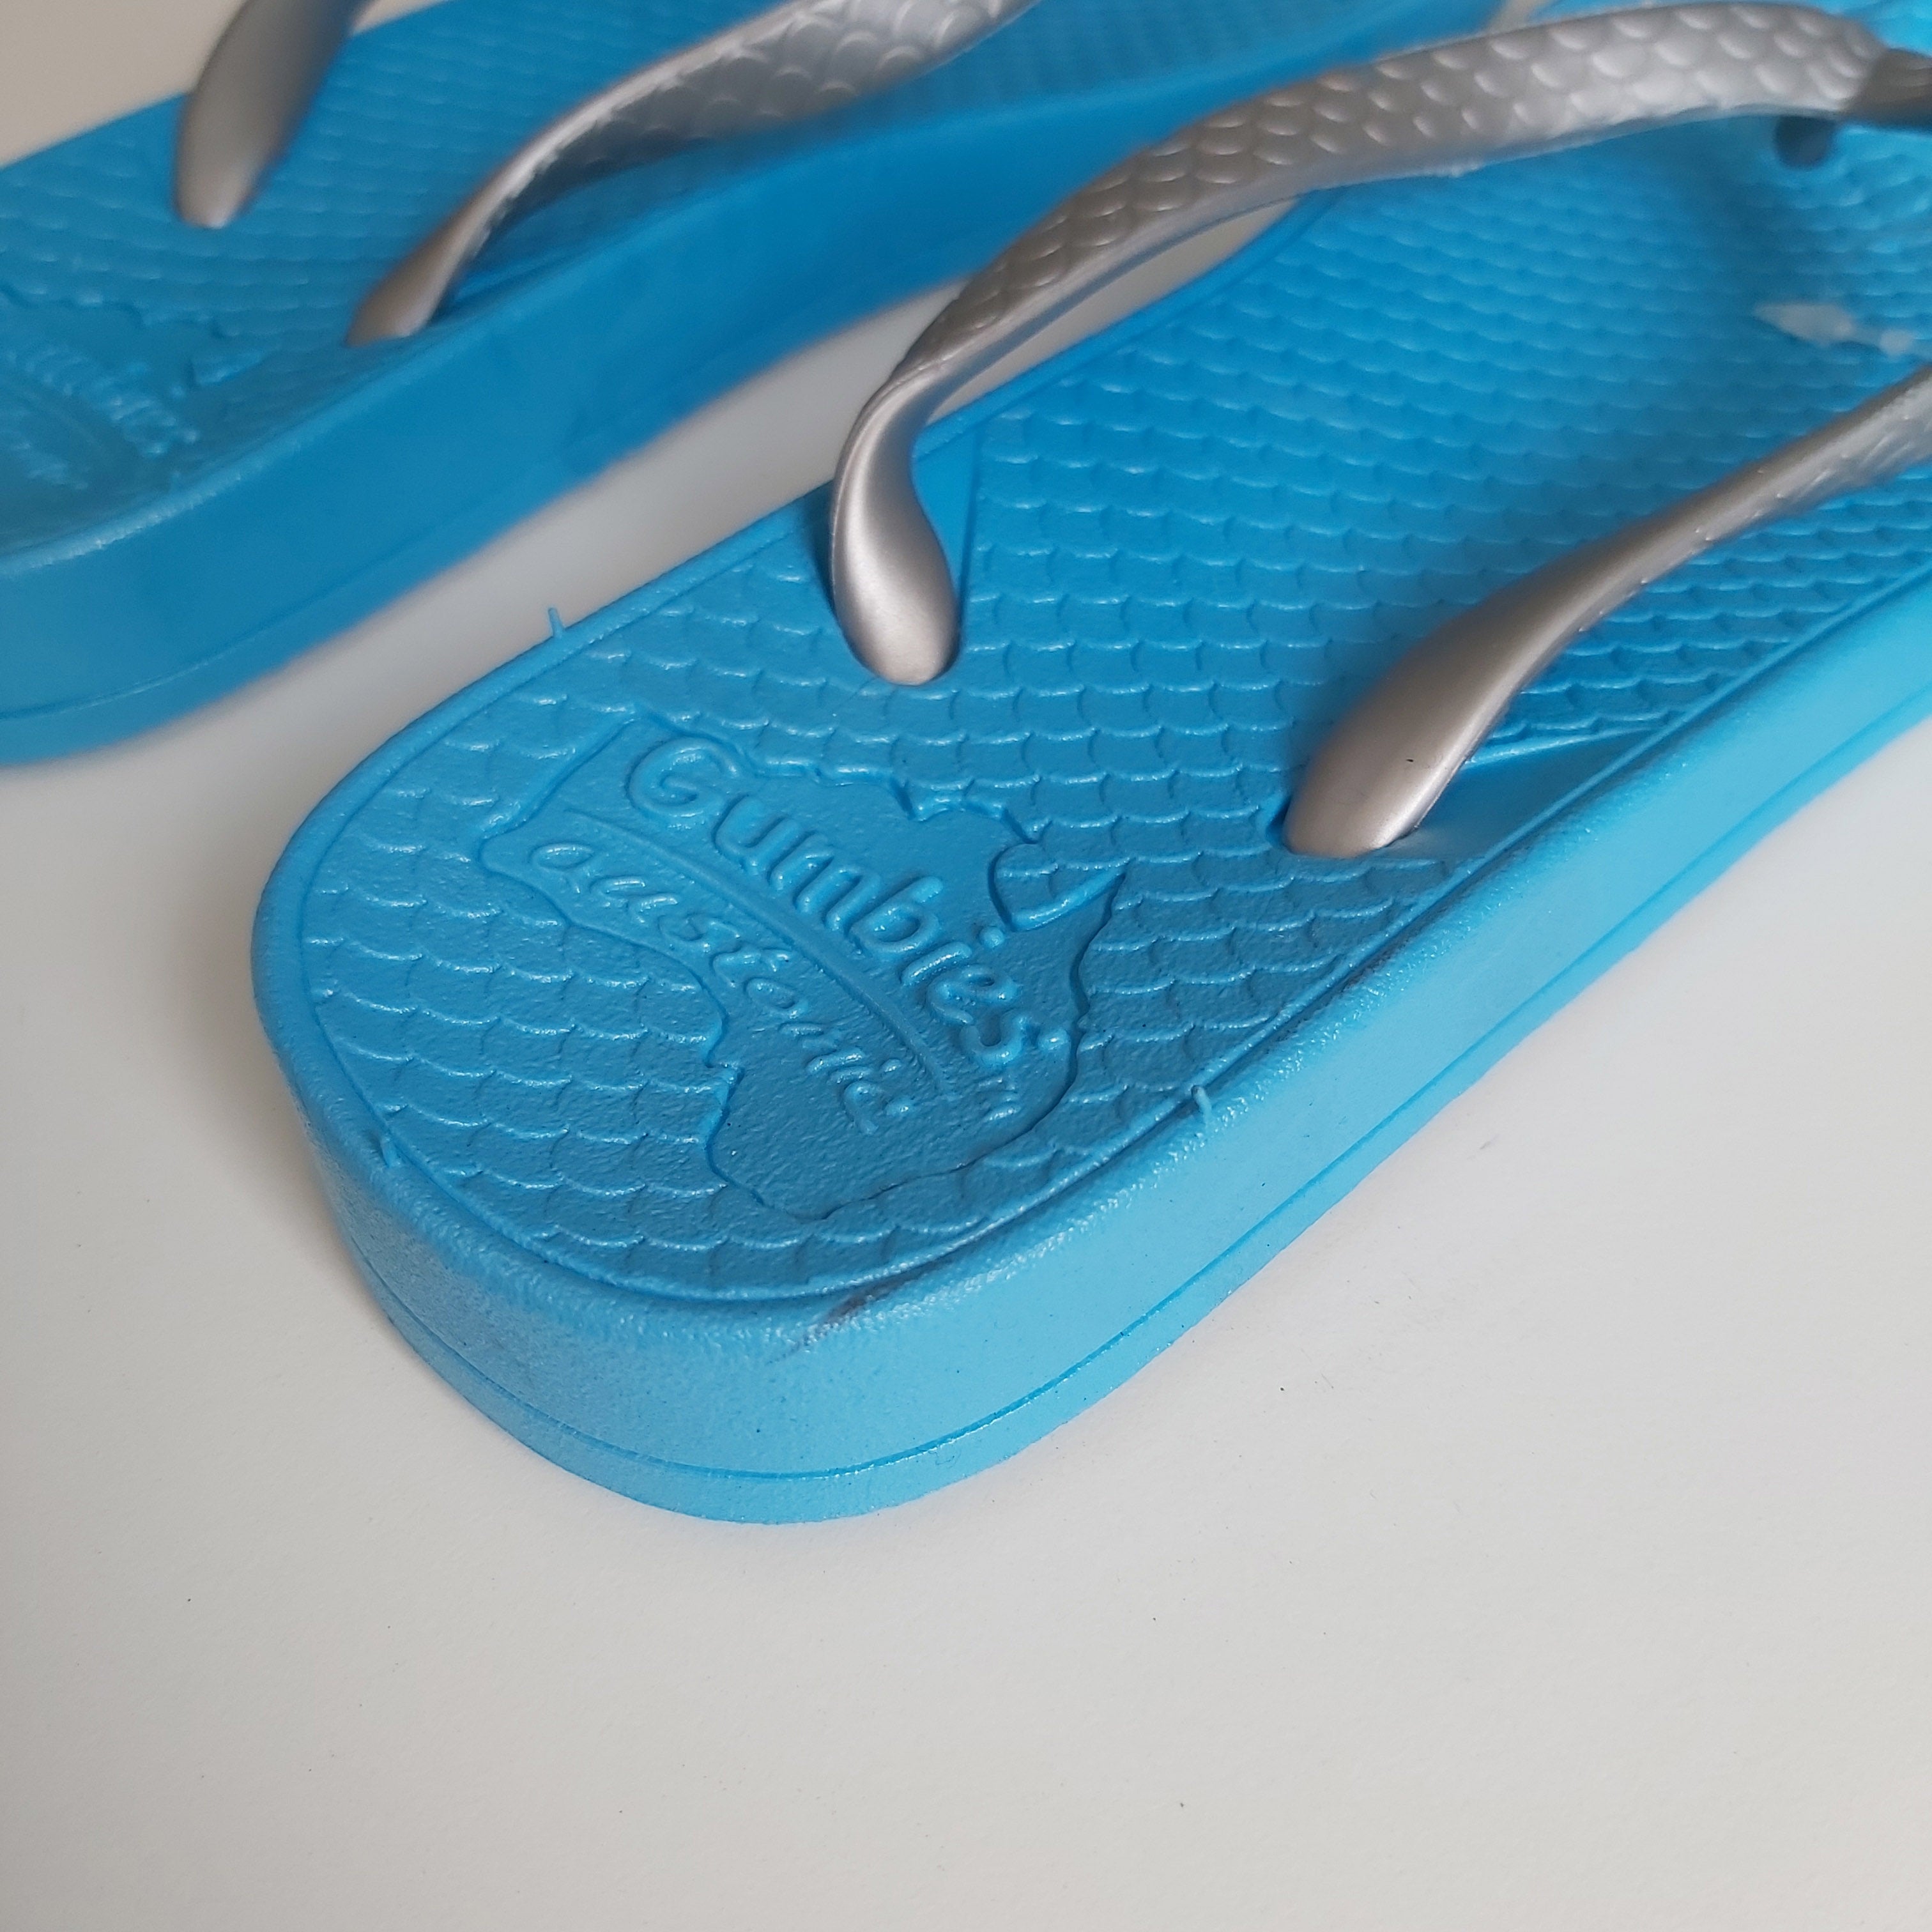 Gumbies Flip Flops - Aqua Blue with Silver Strap UK Size 2/3